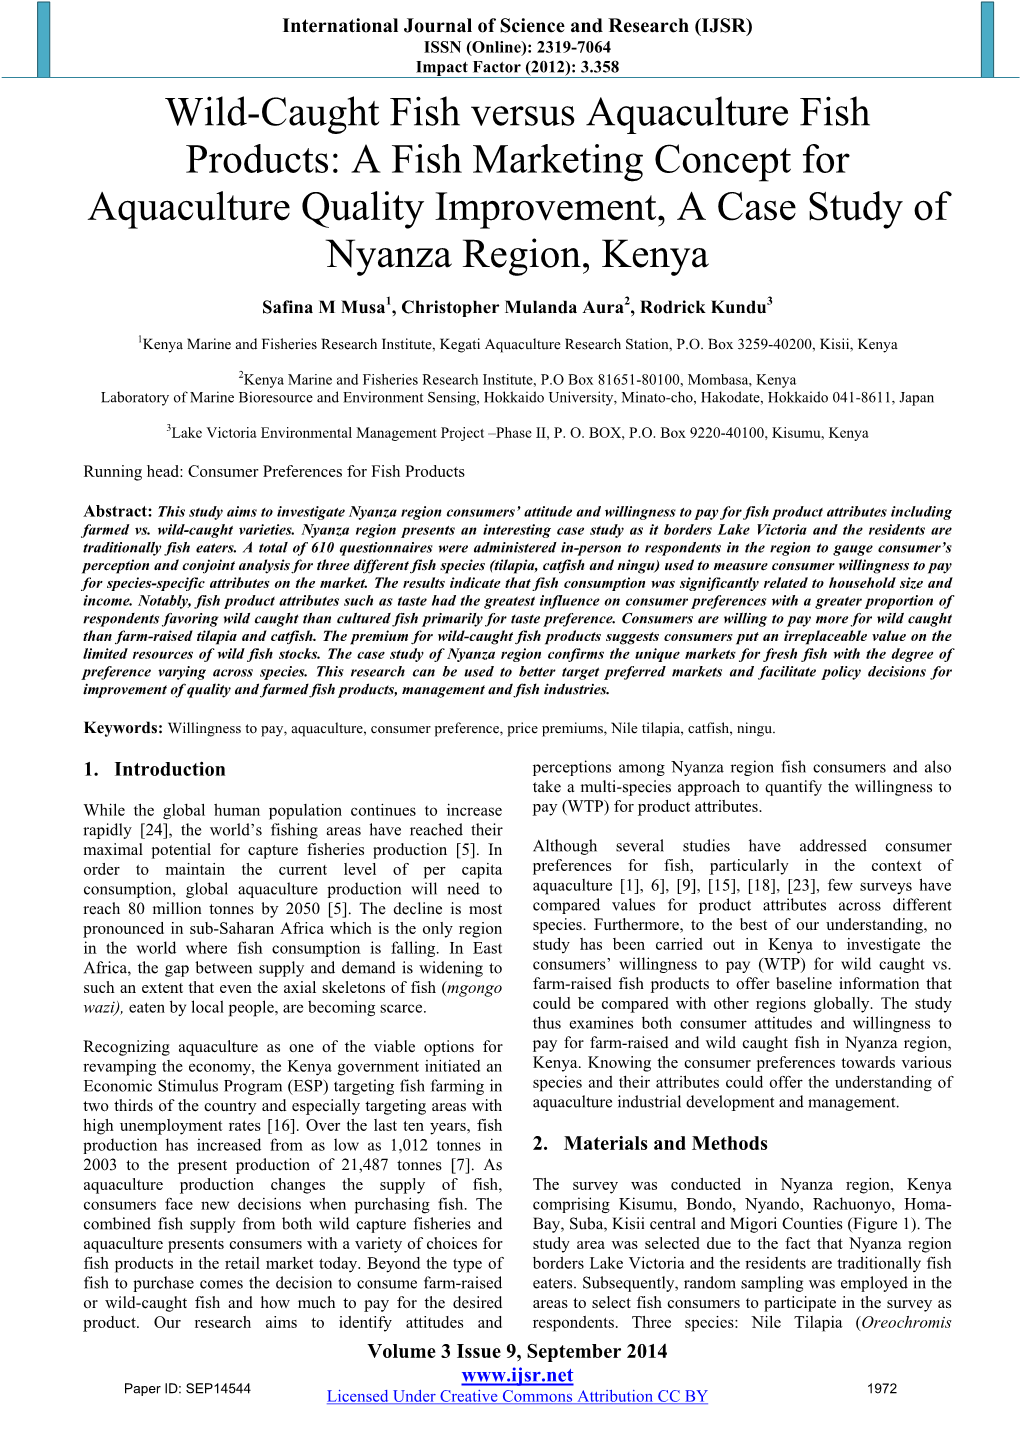 Wild-Caught Fish Versus Aquaculture Fish Products: a Fish Marketing Concept for Aquaculture Quality Improvement, a Case Study of Nyanza Region, Kenya